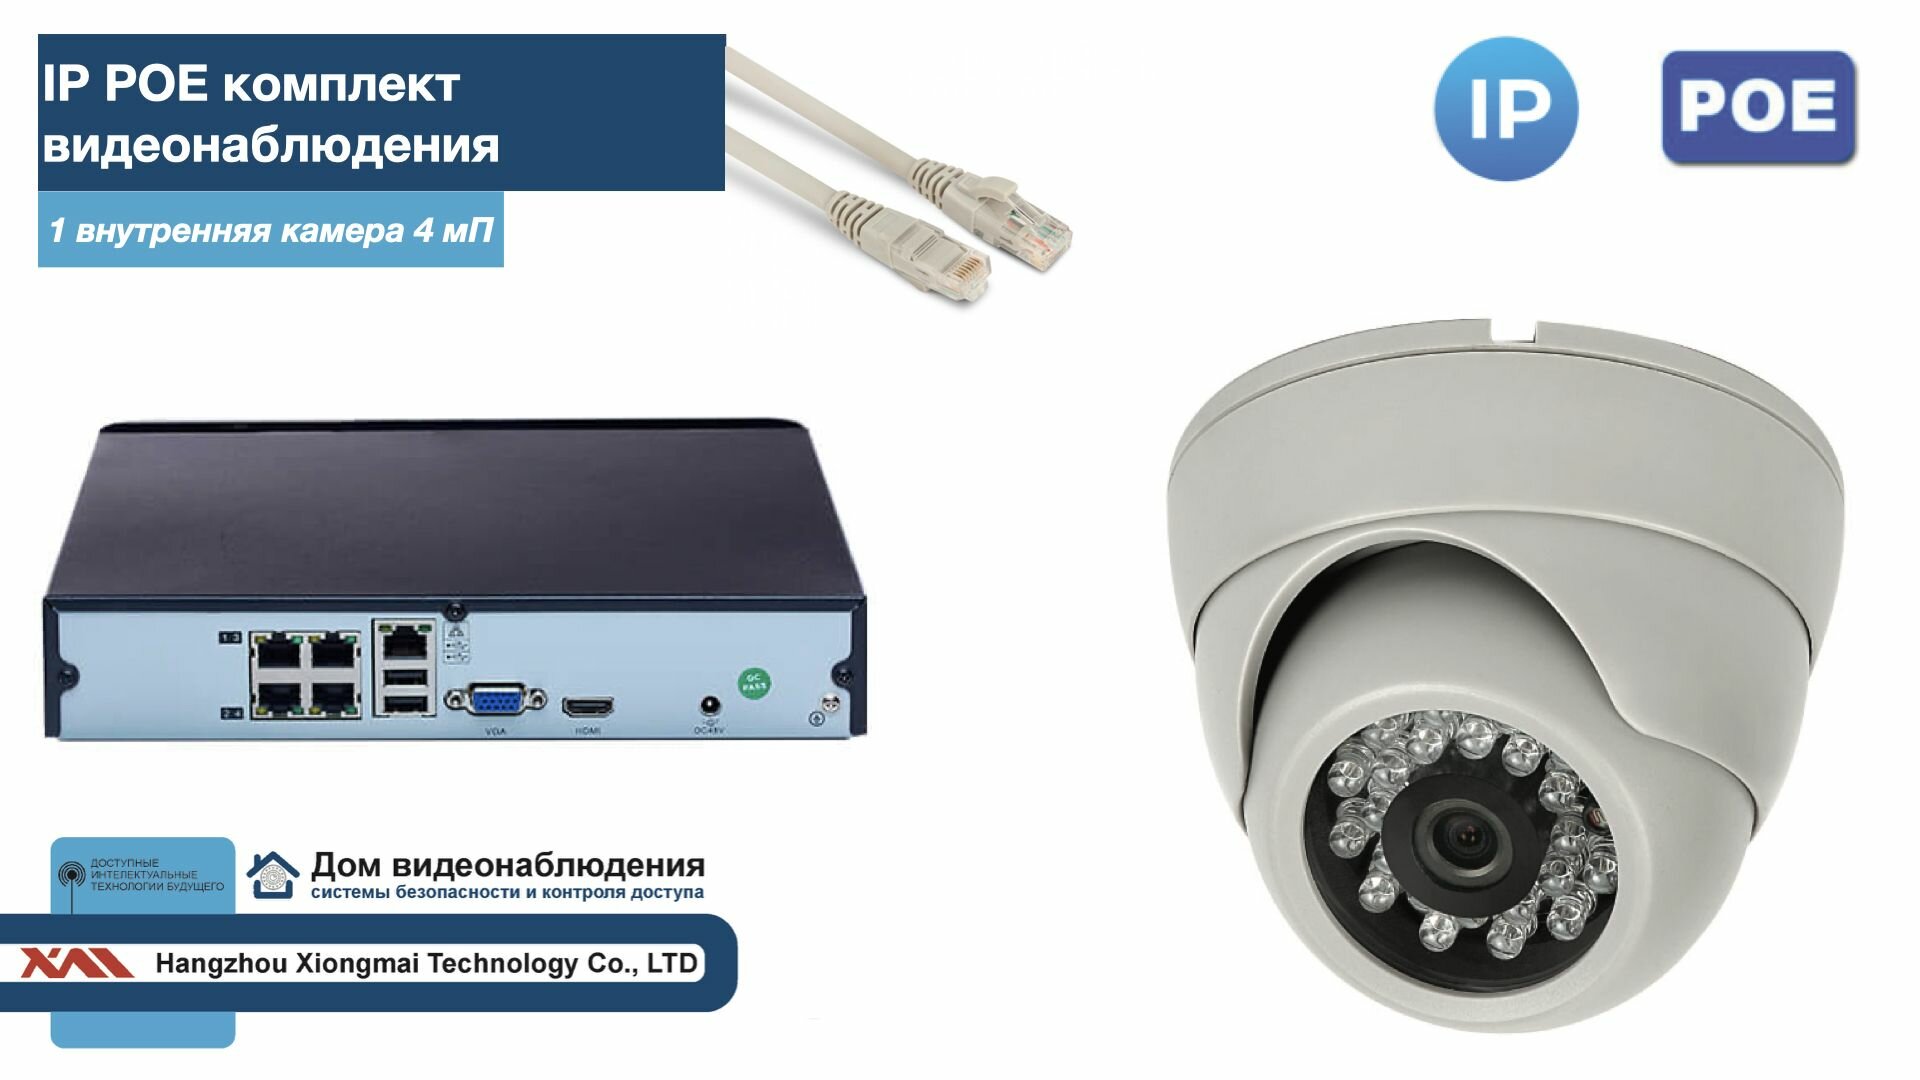 Полный IP POE комплект видеонаблюдения на 1 камеру (KIT1IPPOE300W4MP-2)